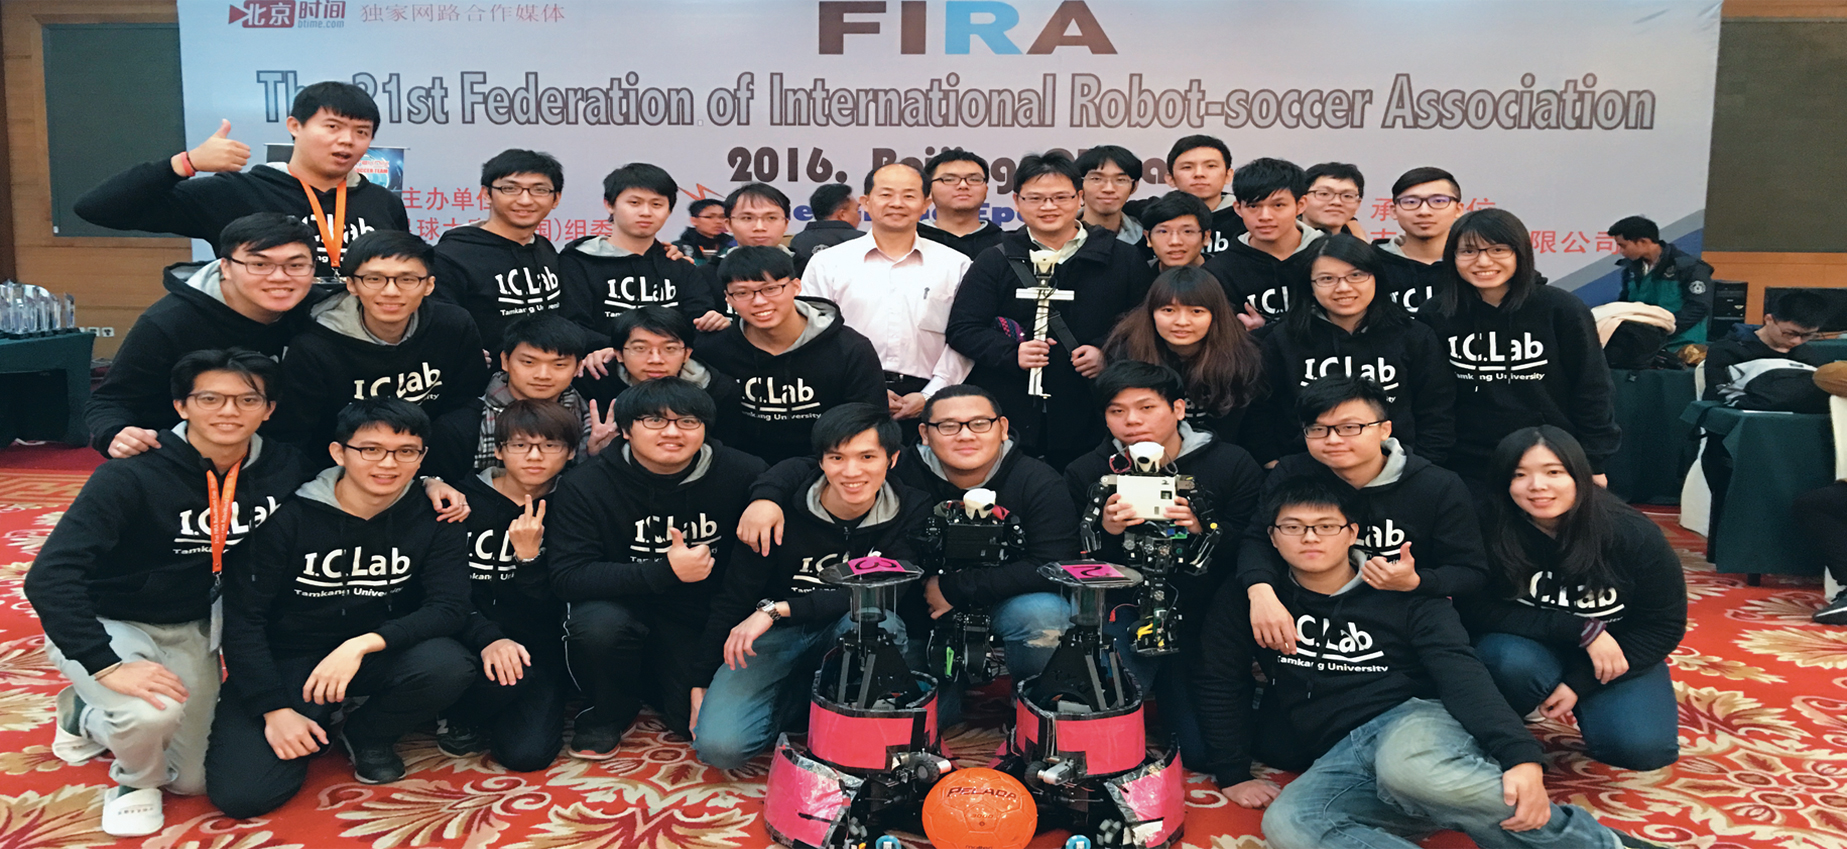 FIRA世界盃機器人比賽 2016, Beijing